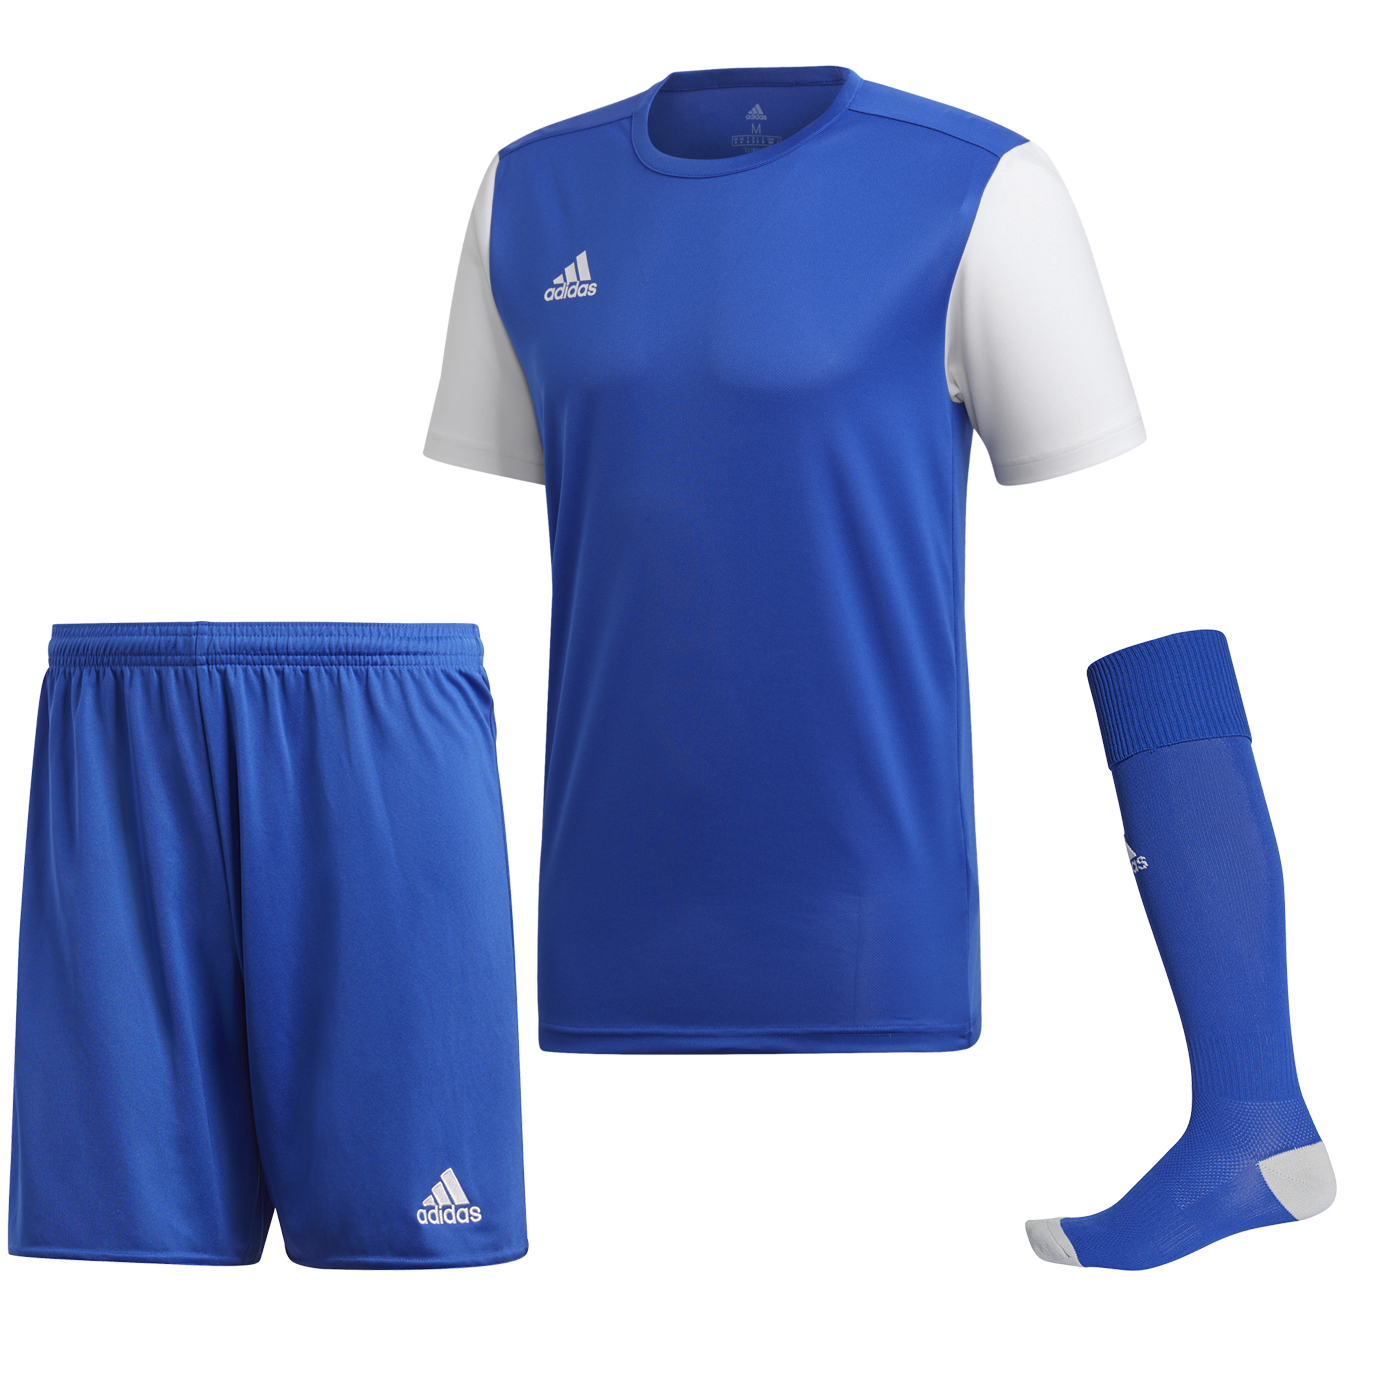 Adidas Estro 19 modrá/bílá UK Junior M Dětské